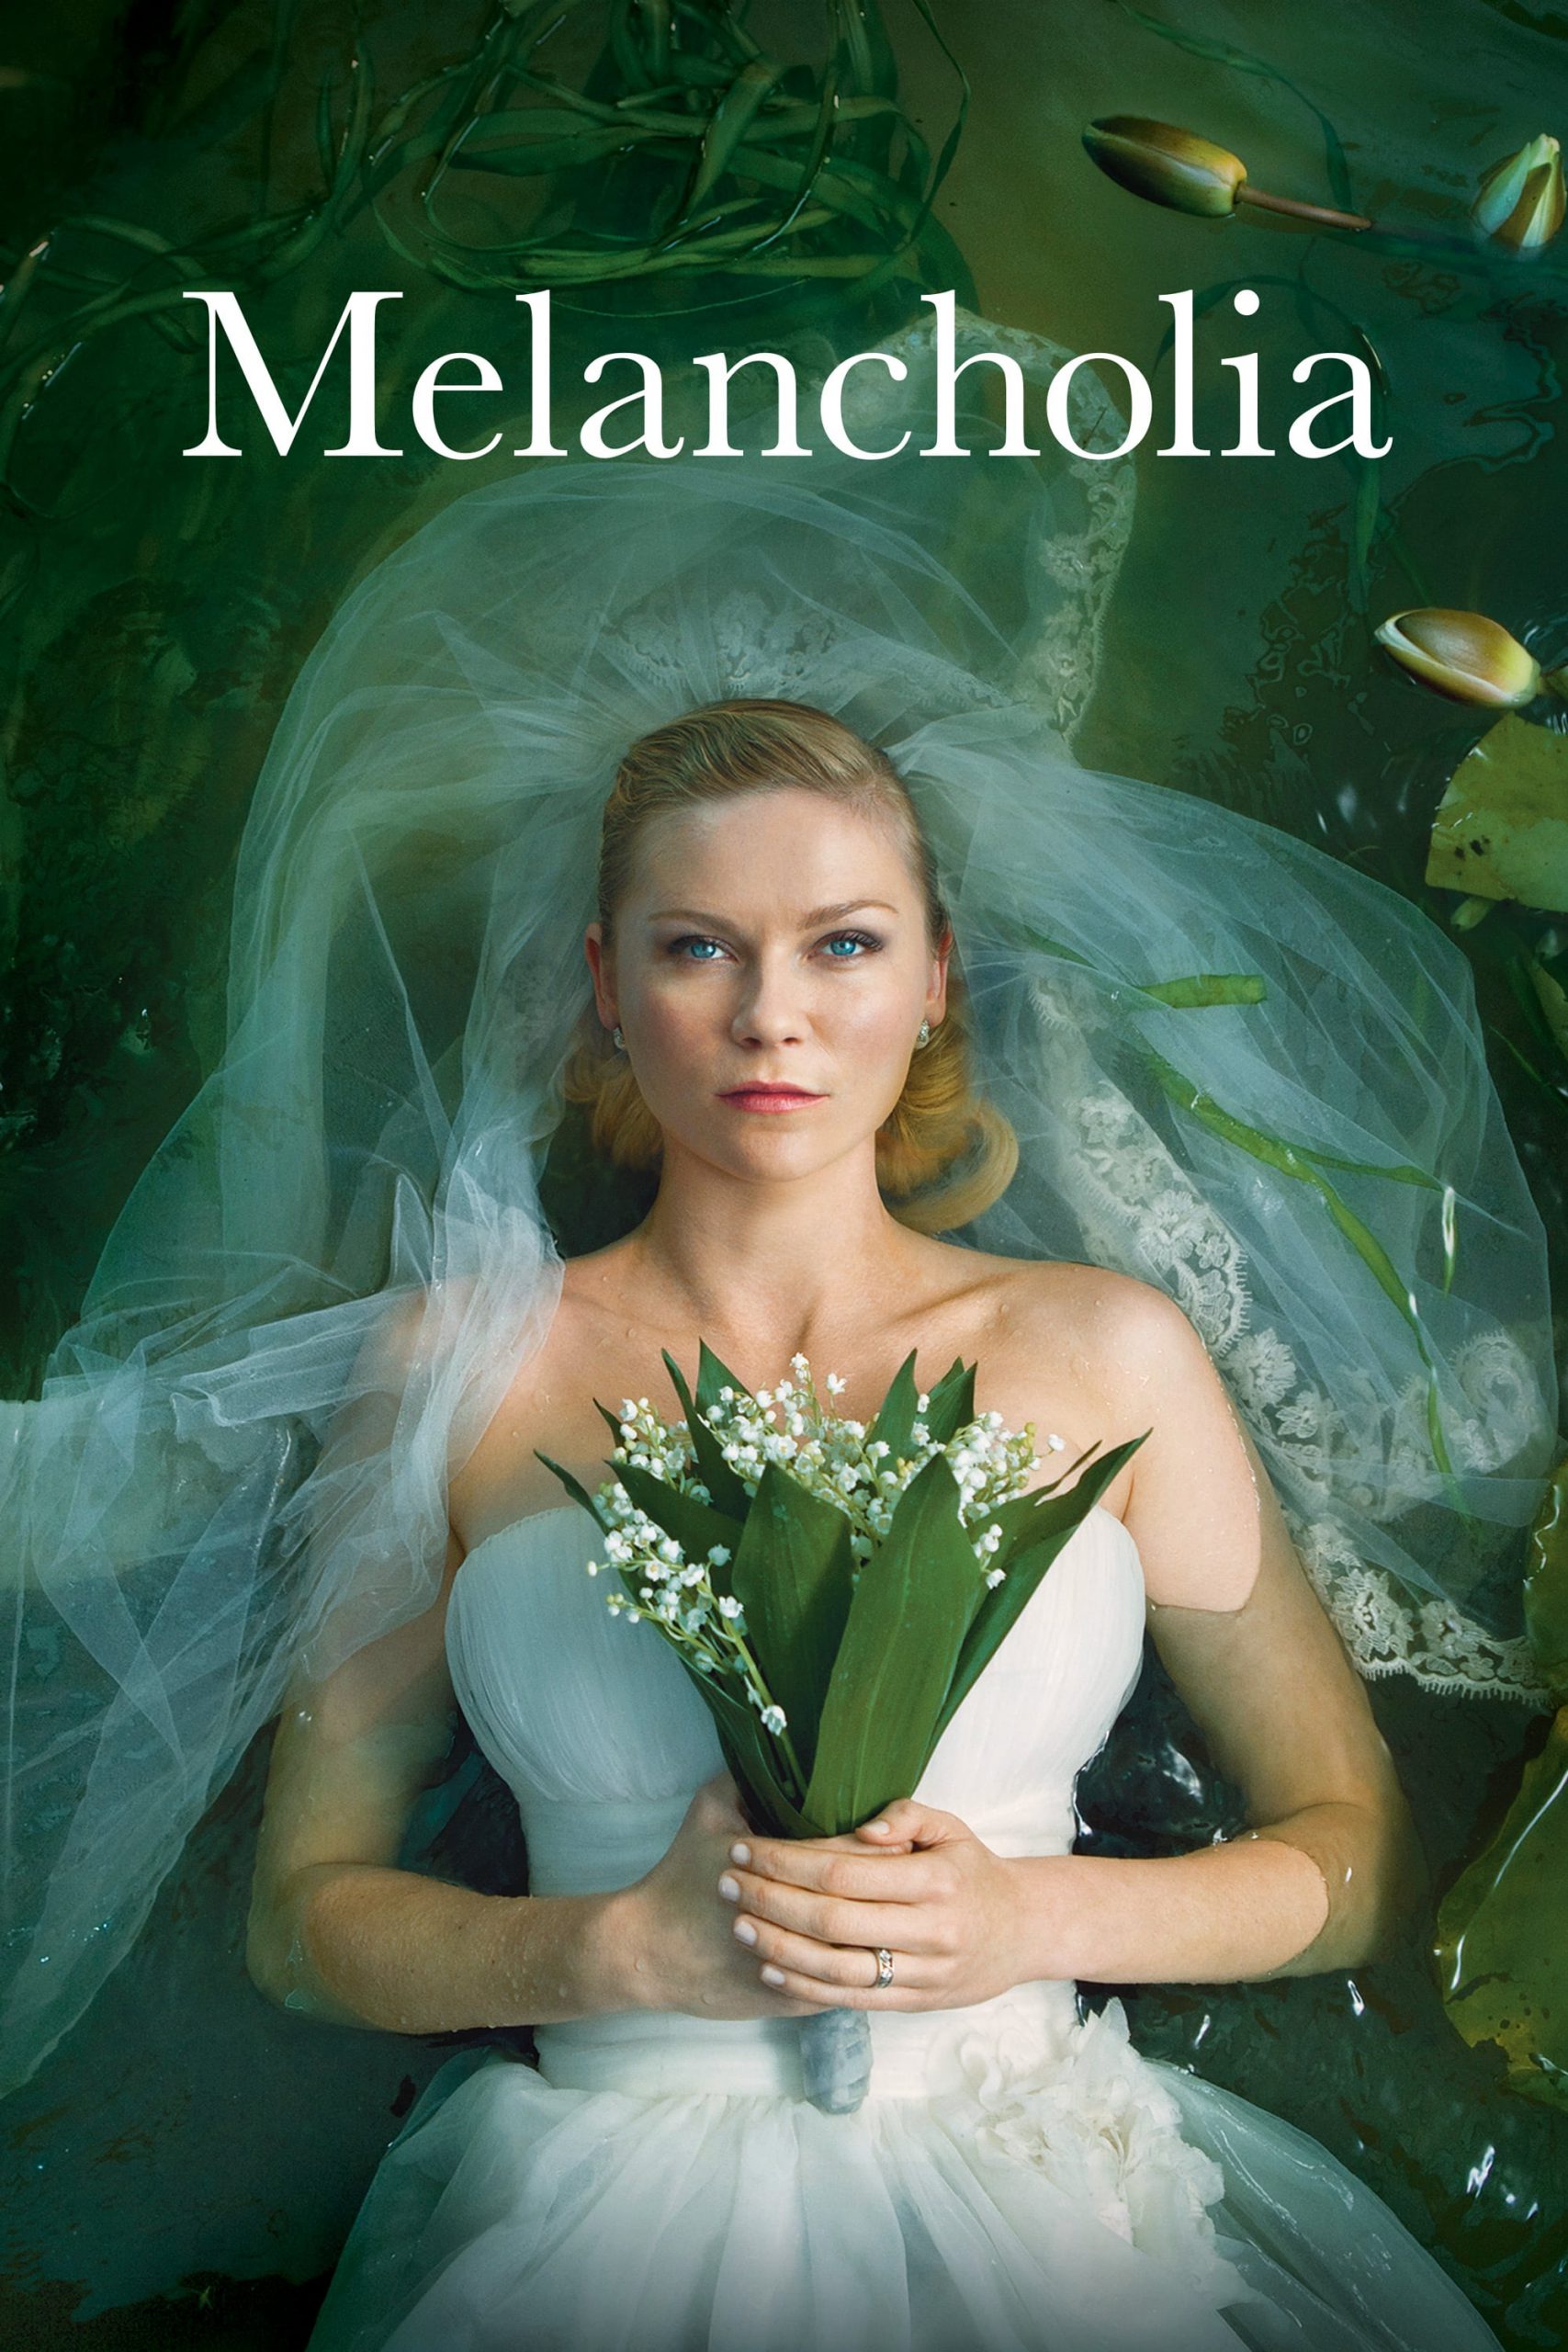 Melancholia [HD] (2011)